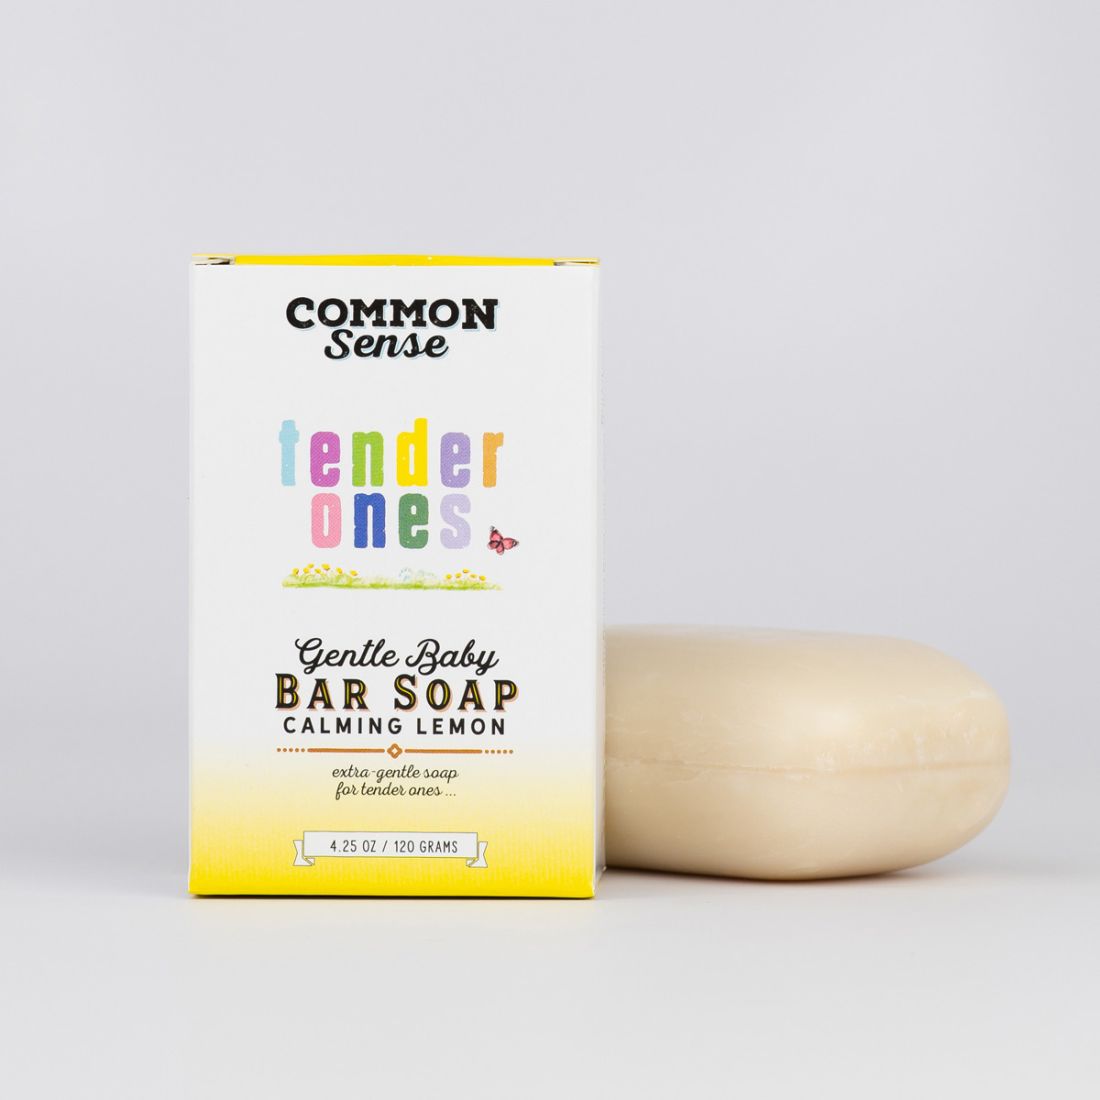 Tender Ones, Baby Bar Soap, 4.25 oz